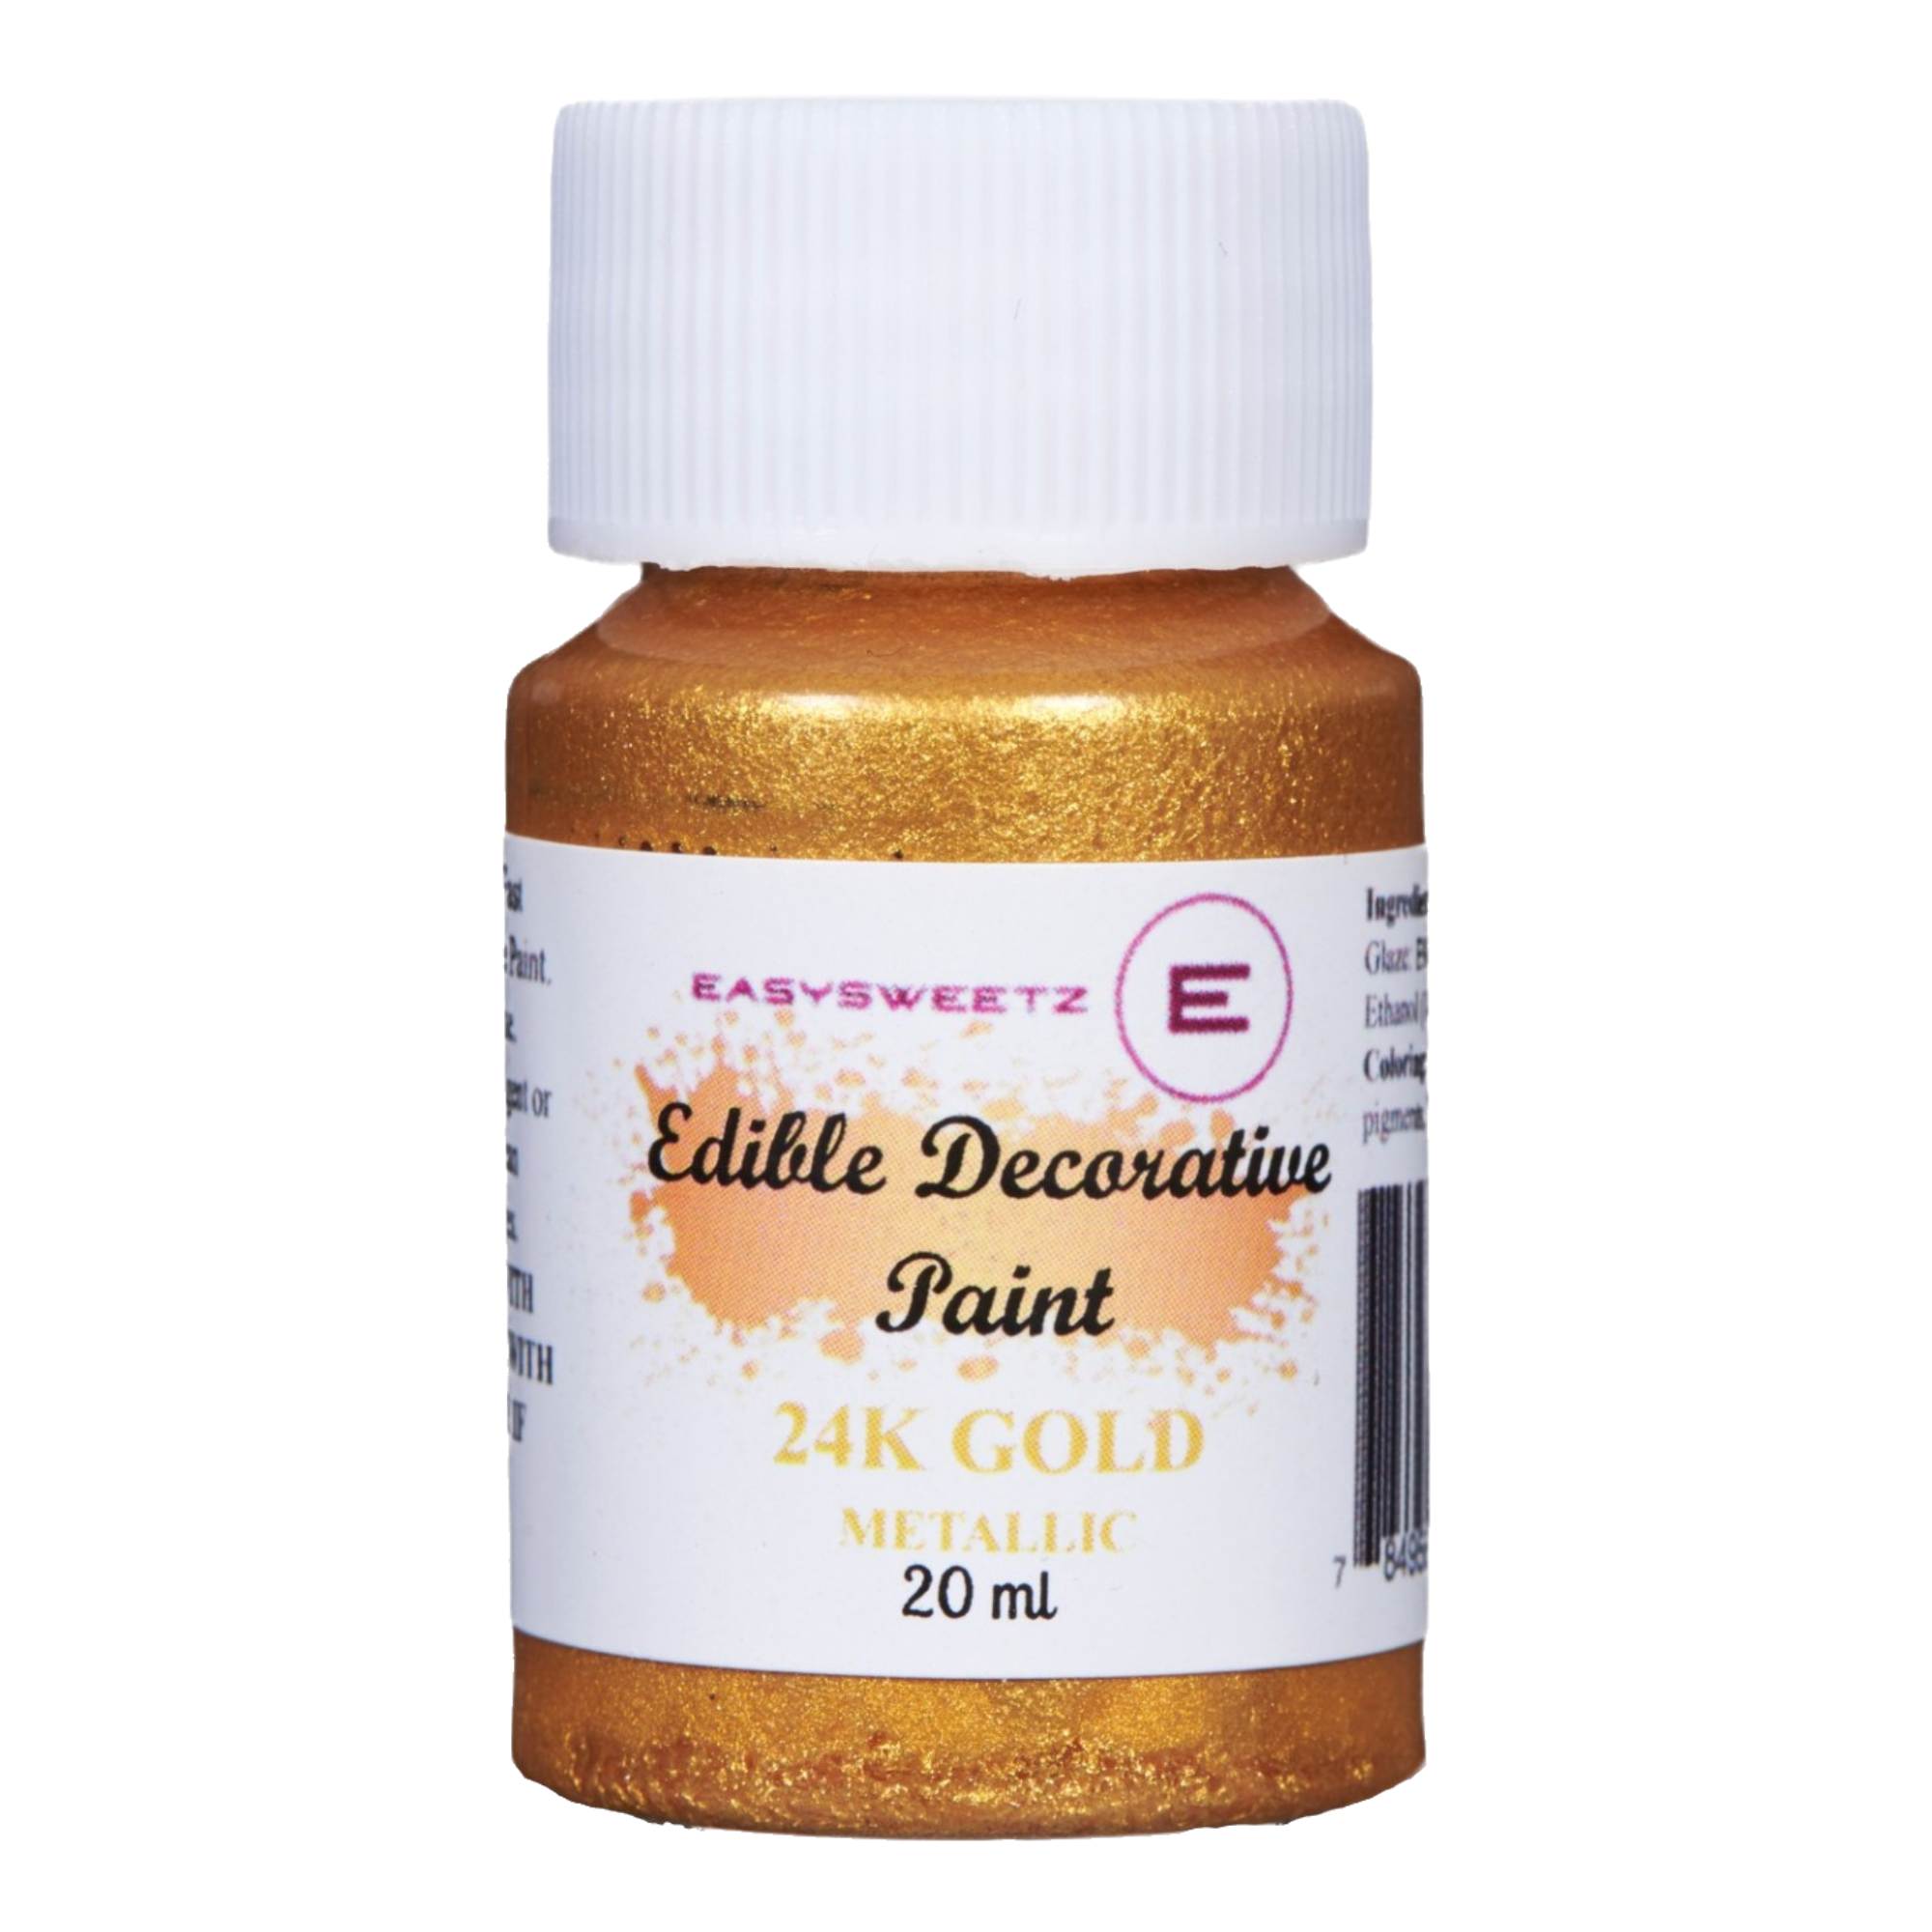 Edible Decorative Paint 24K Gold Metallic: 20ml